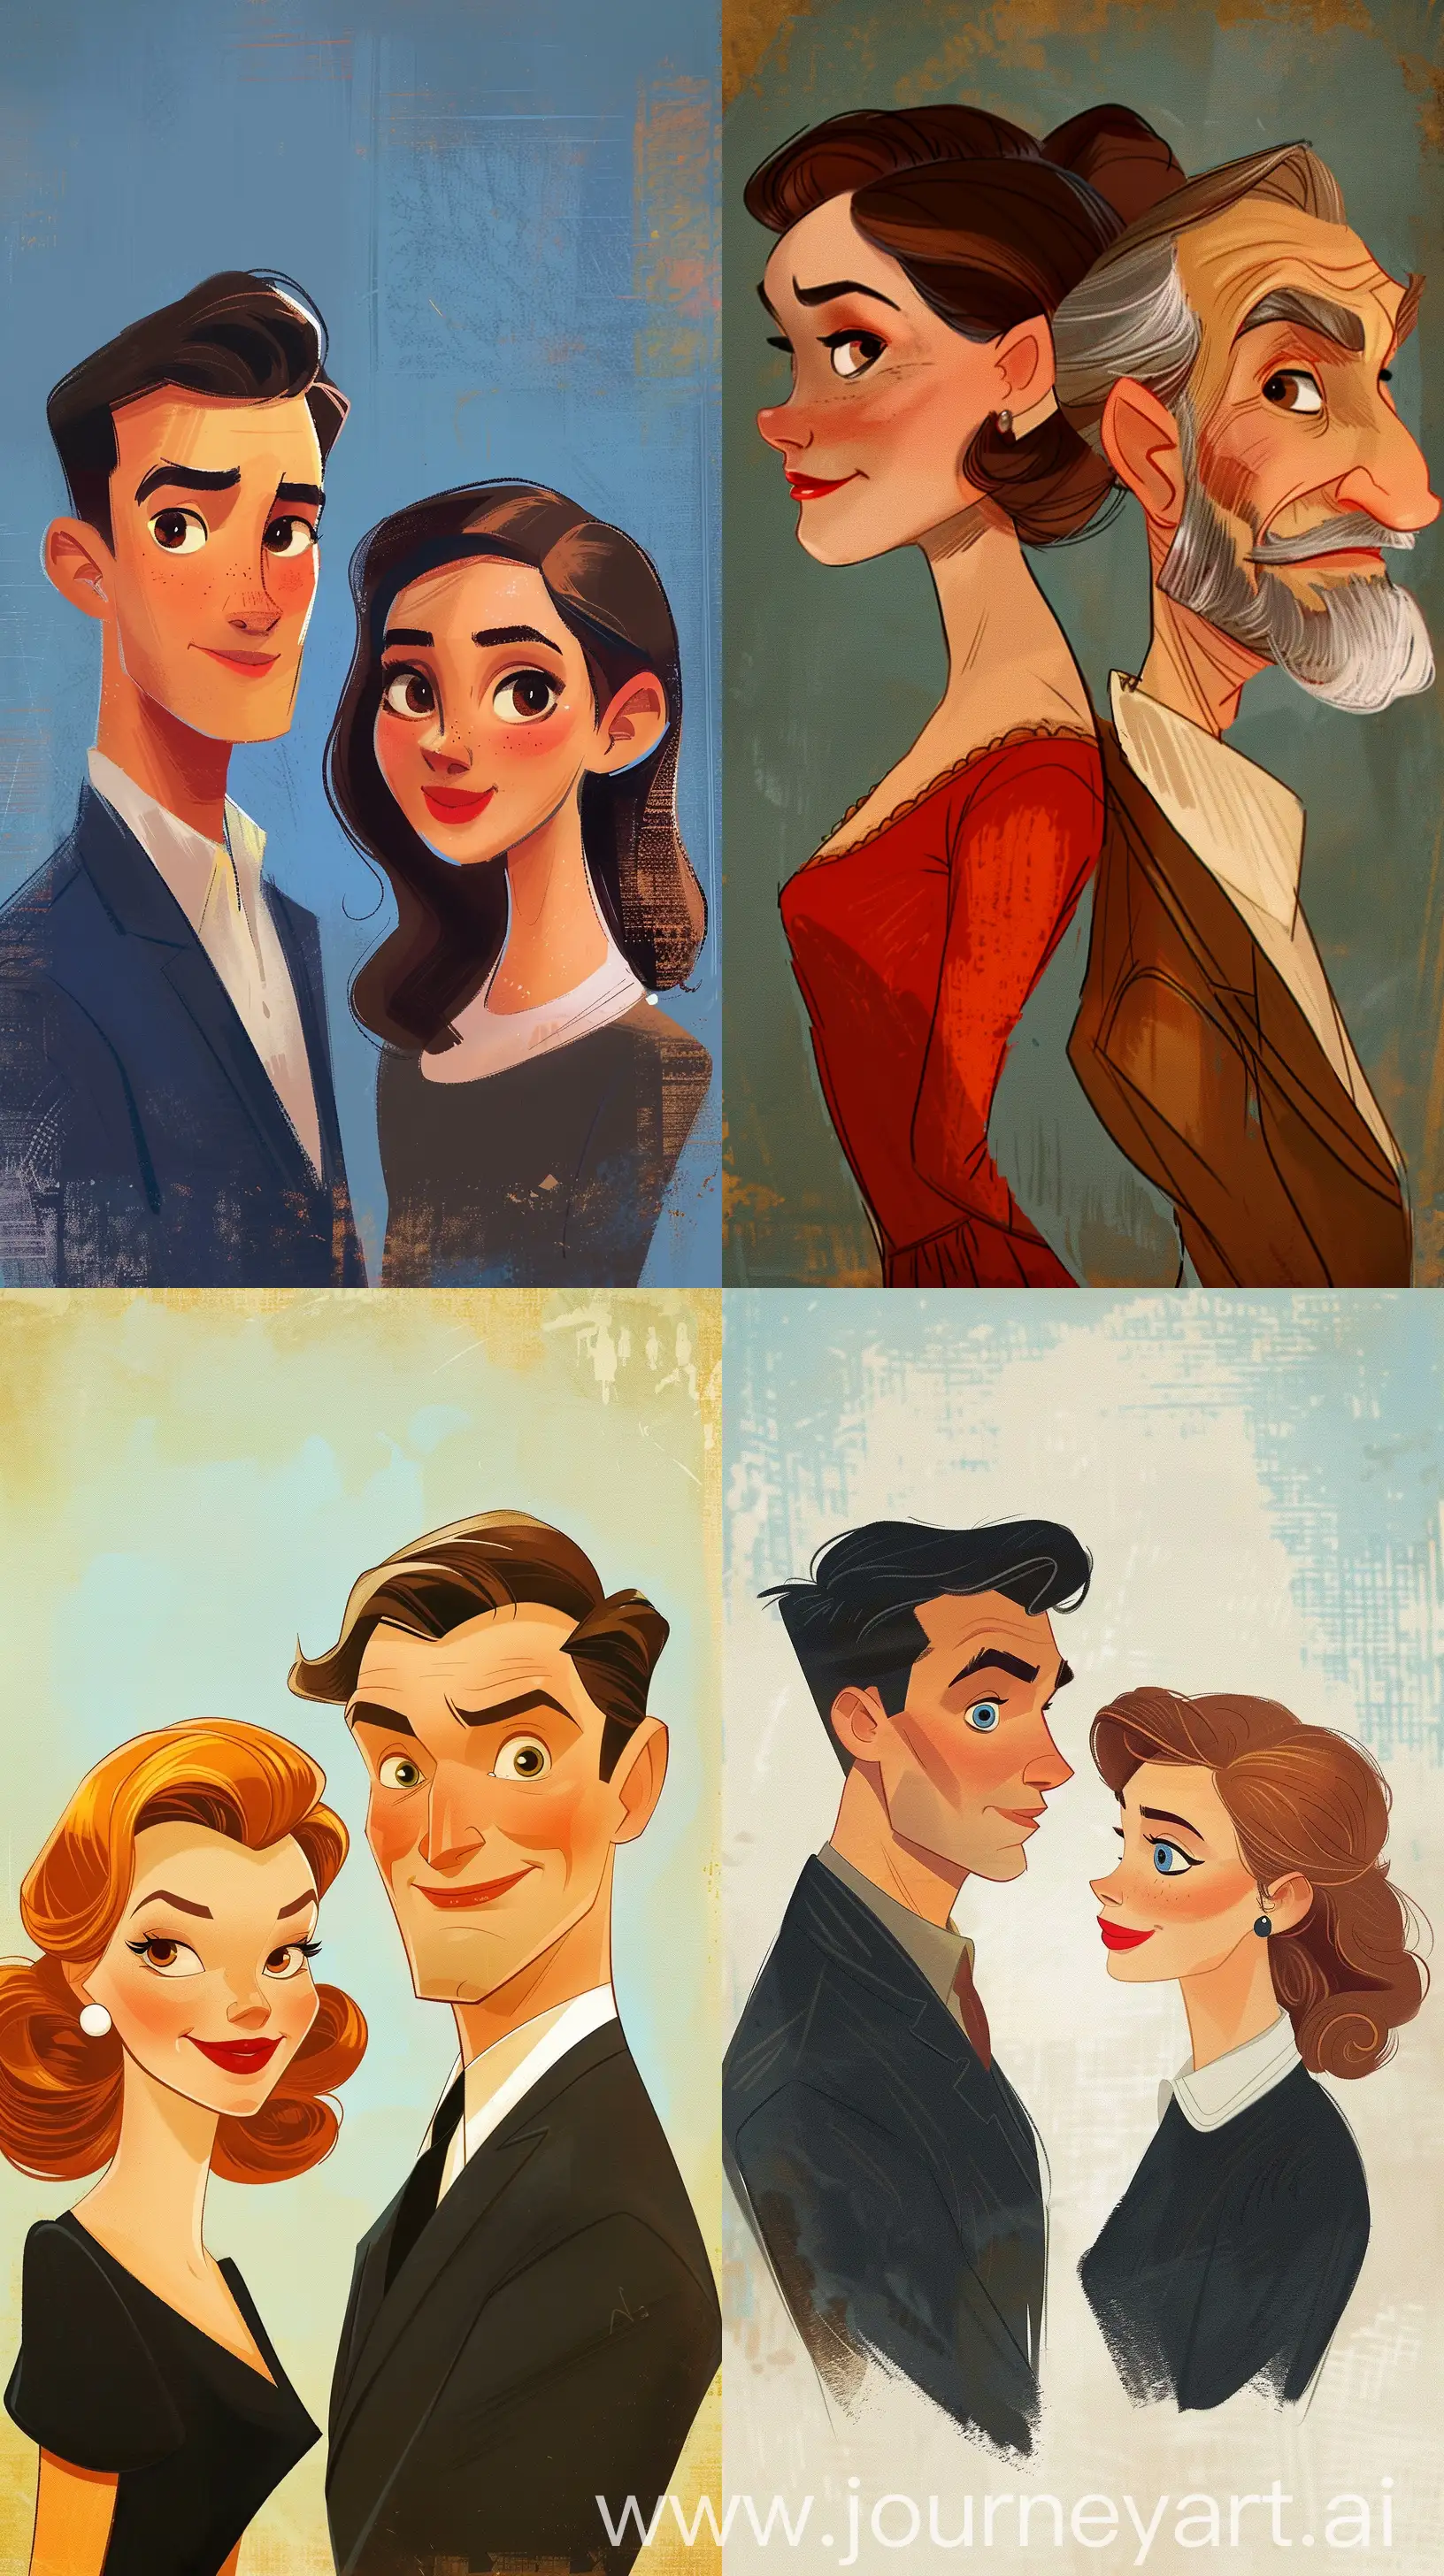 Cartoon-Portraits-of-Man-and-Woman-in-Kees-van-Dongen-Art-Style-for-DisneyInspired-Phone-Wallpaper